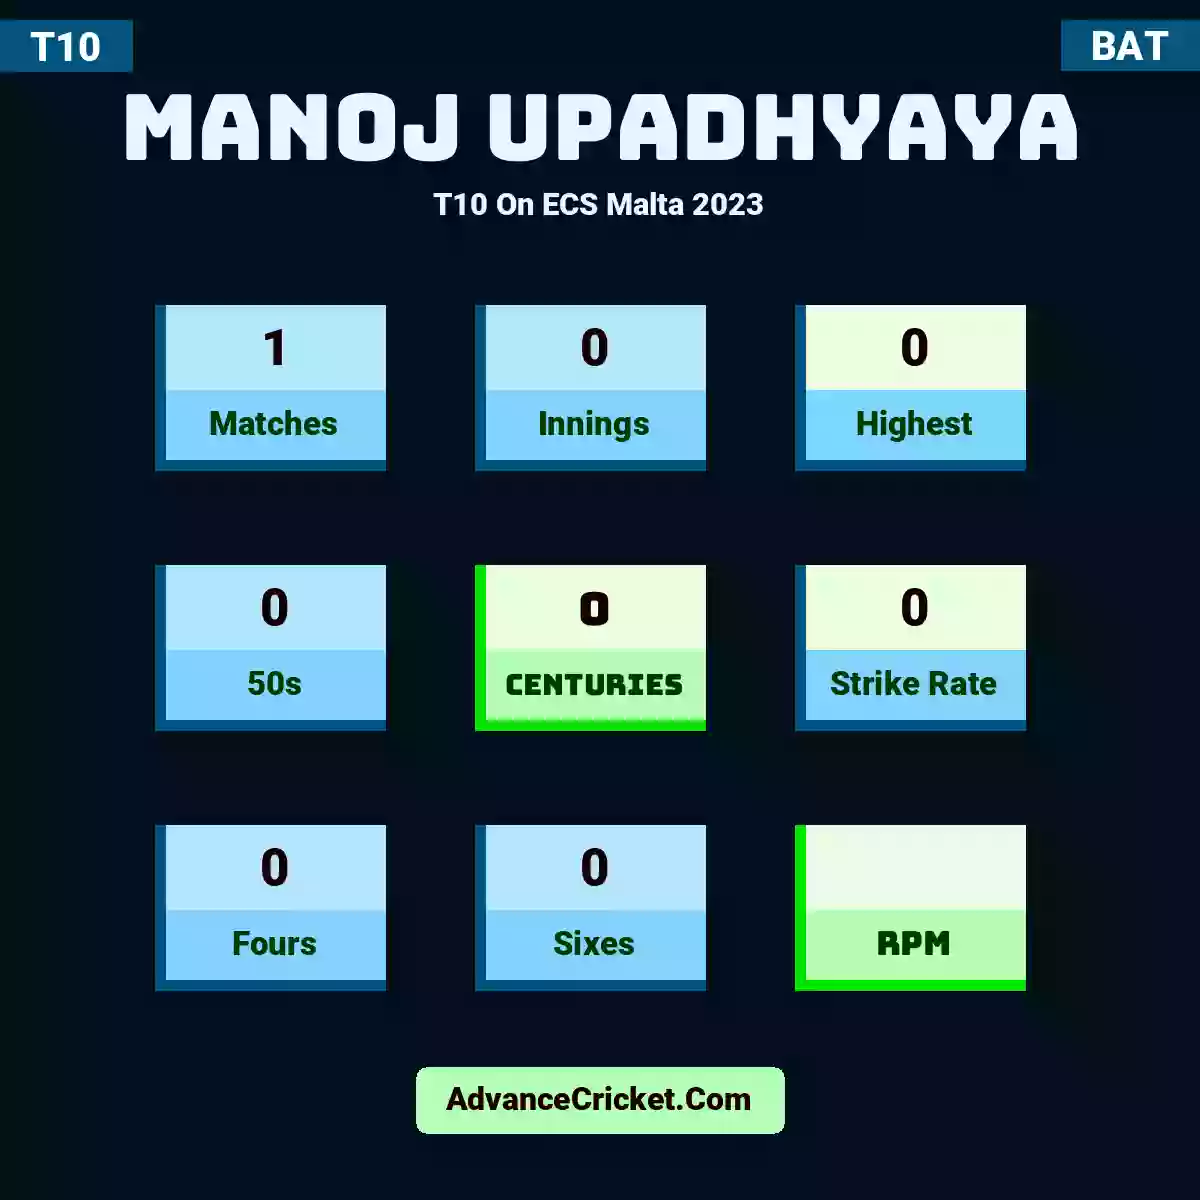 Manoj Upadhyaya T10  On ECS Malta 2023, Manoj Upadhyaya played 1 matches, scored 0 runs as highest, 0 half-centuries, and 0 centuries, with a strike rate of 0. M.Upadhyaya hit 0 fours and 0 sixes.